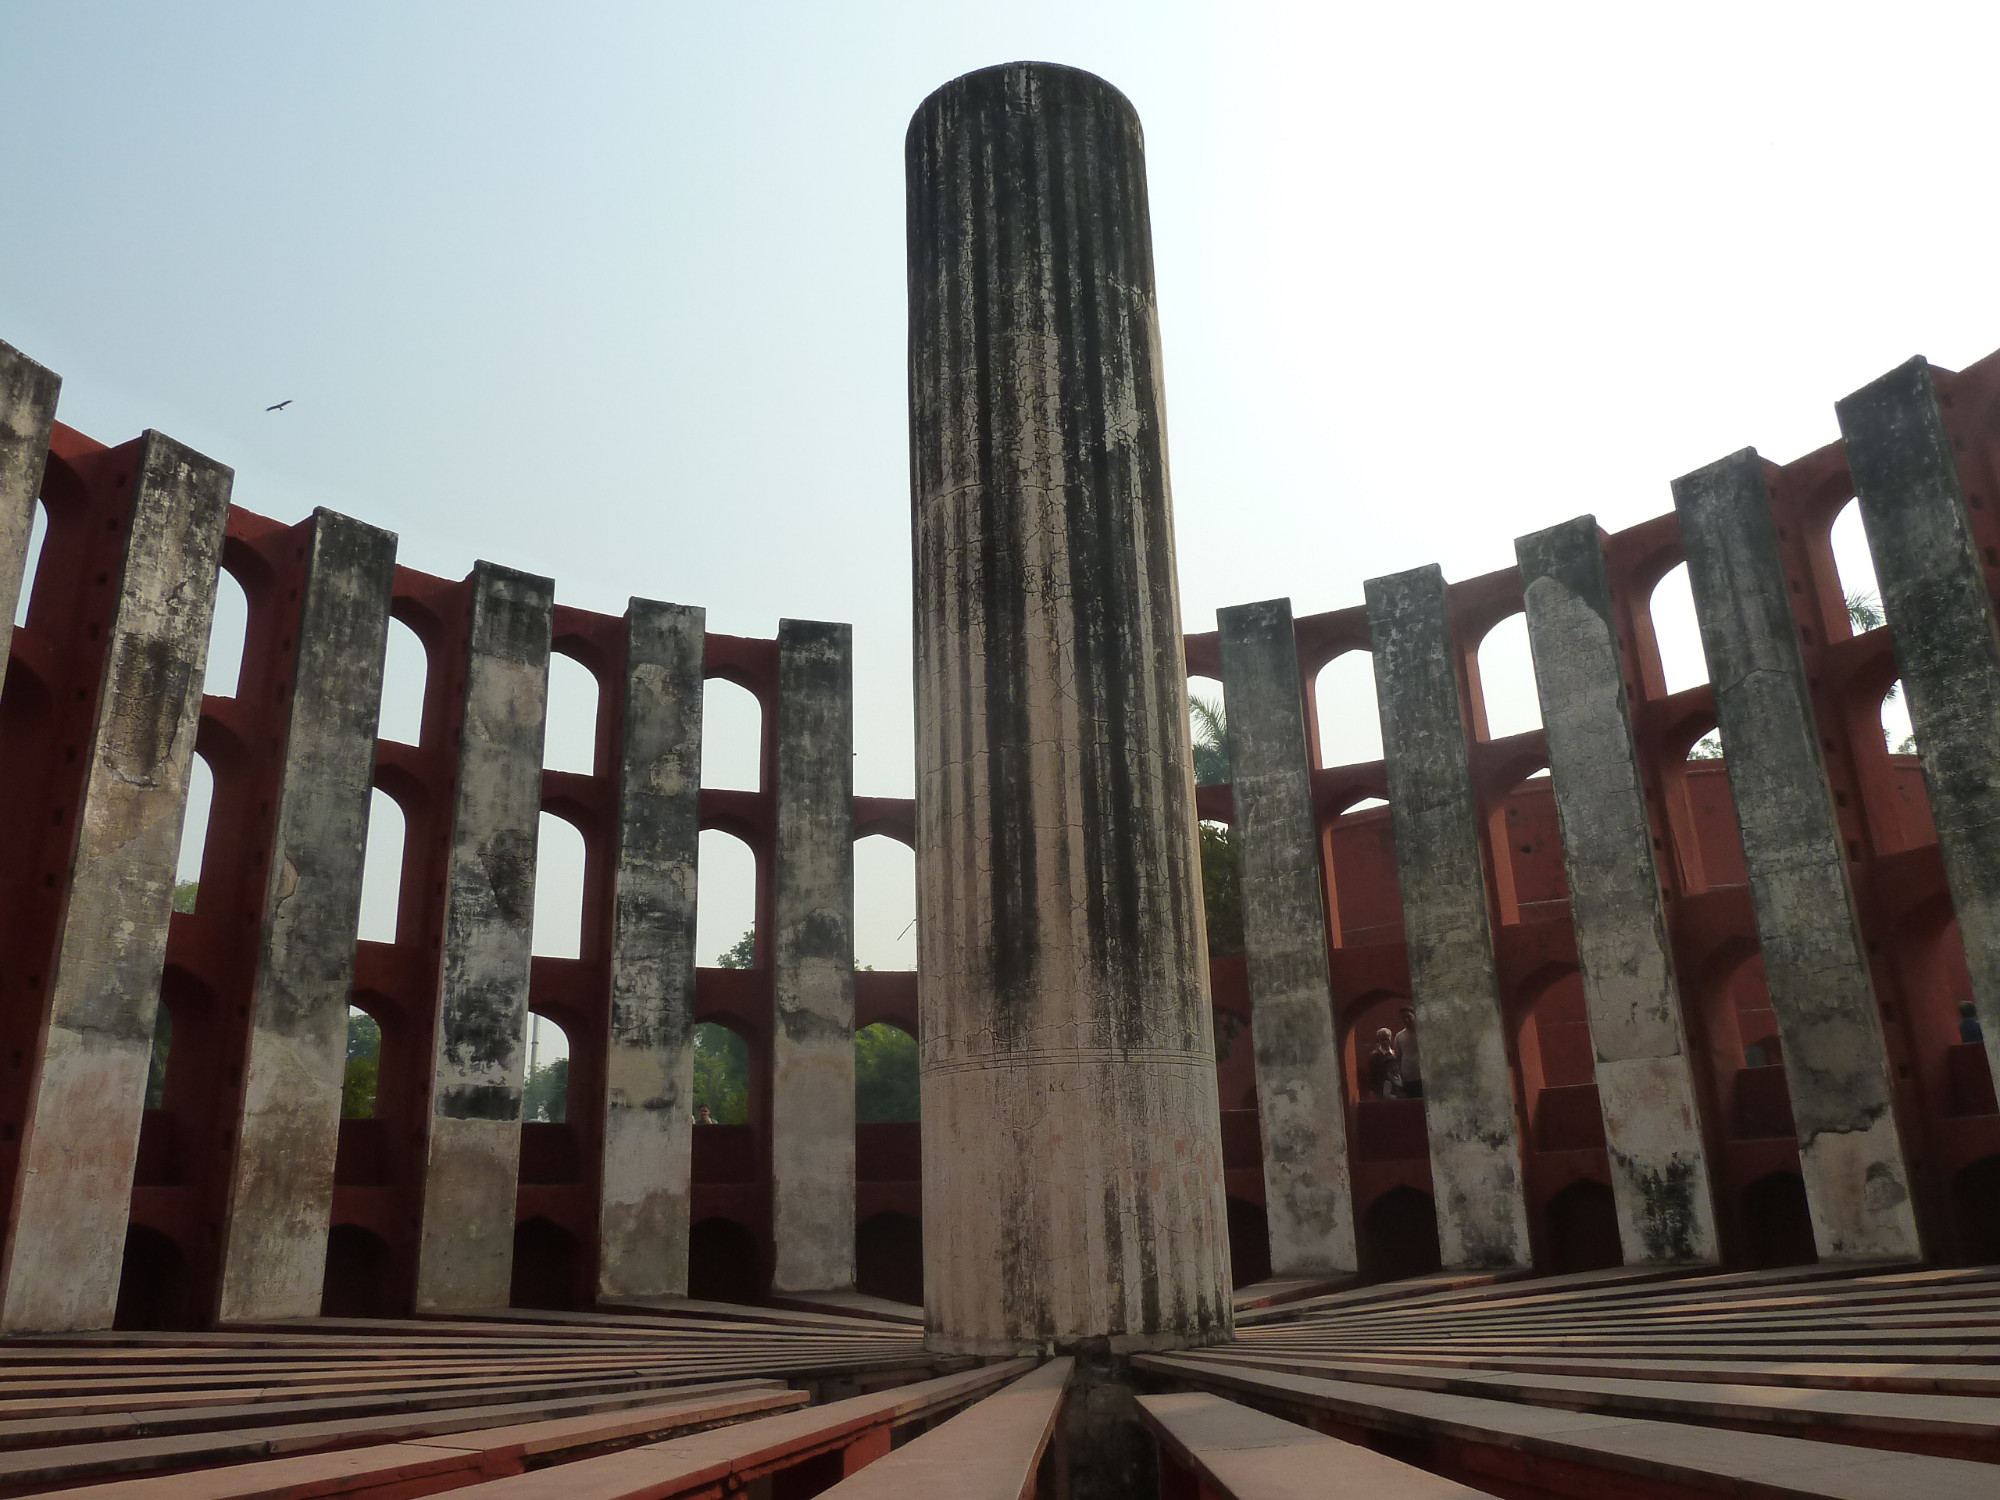 Jantar Mantar — architectural astronomy instruments